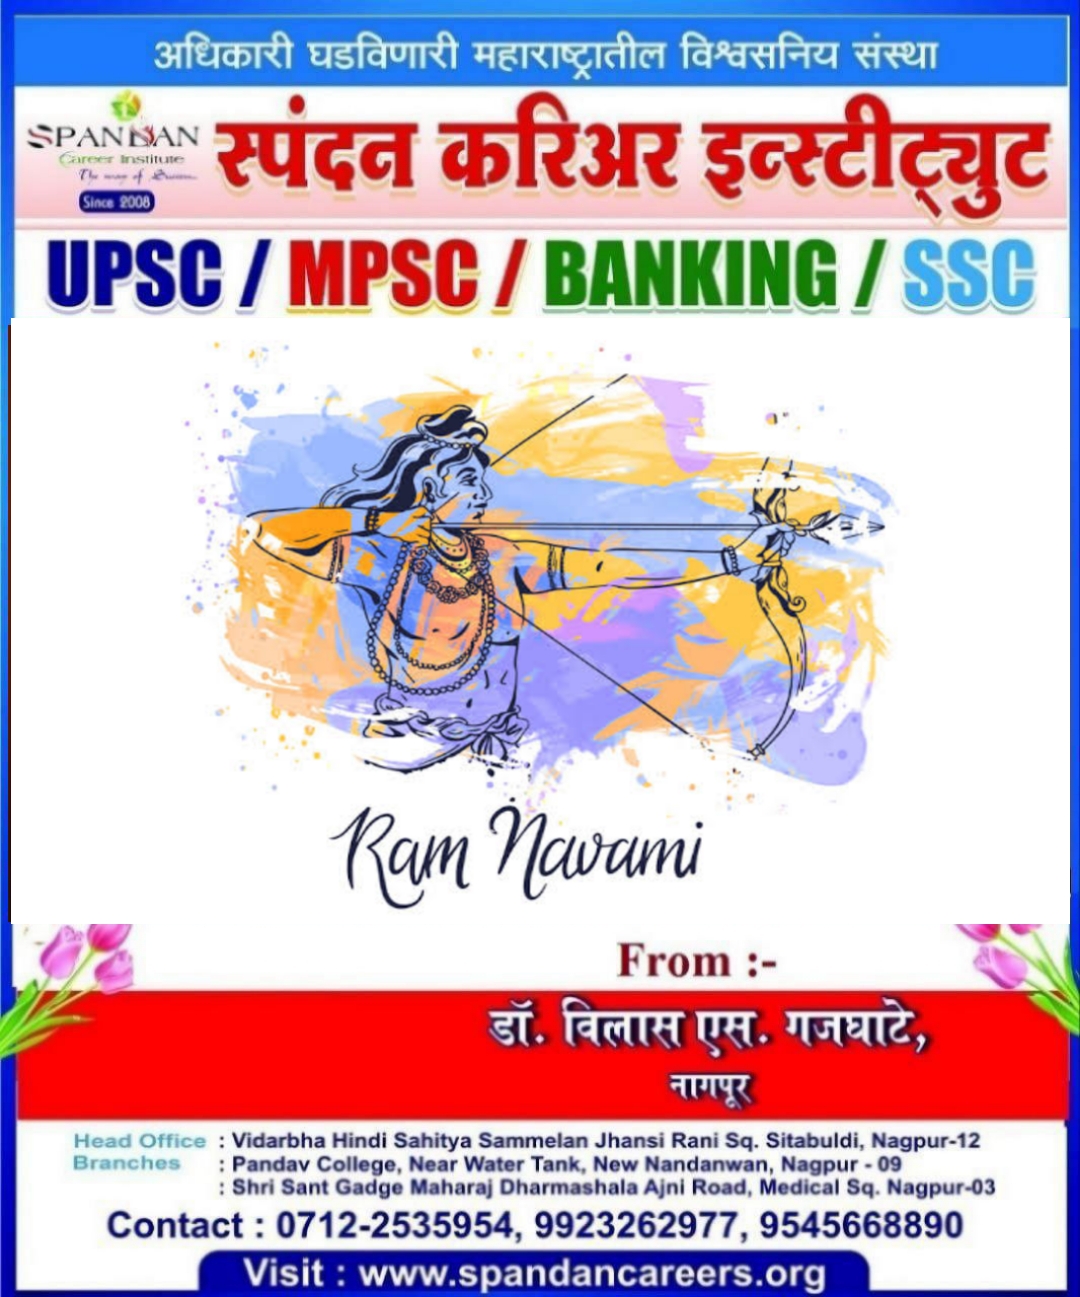 mpsc,upsc,banking classes advertisement